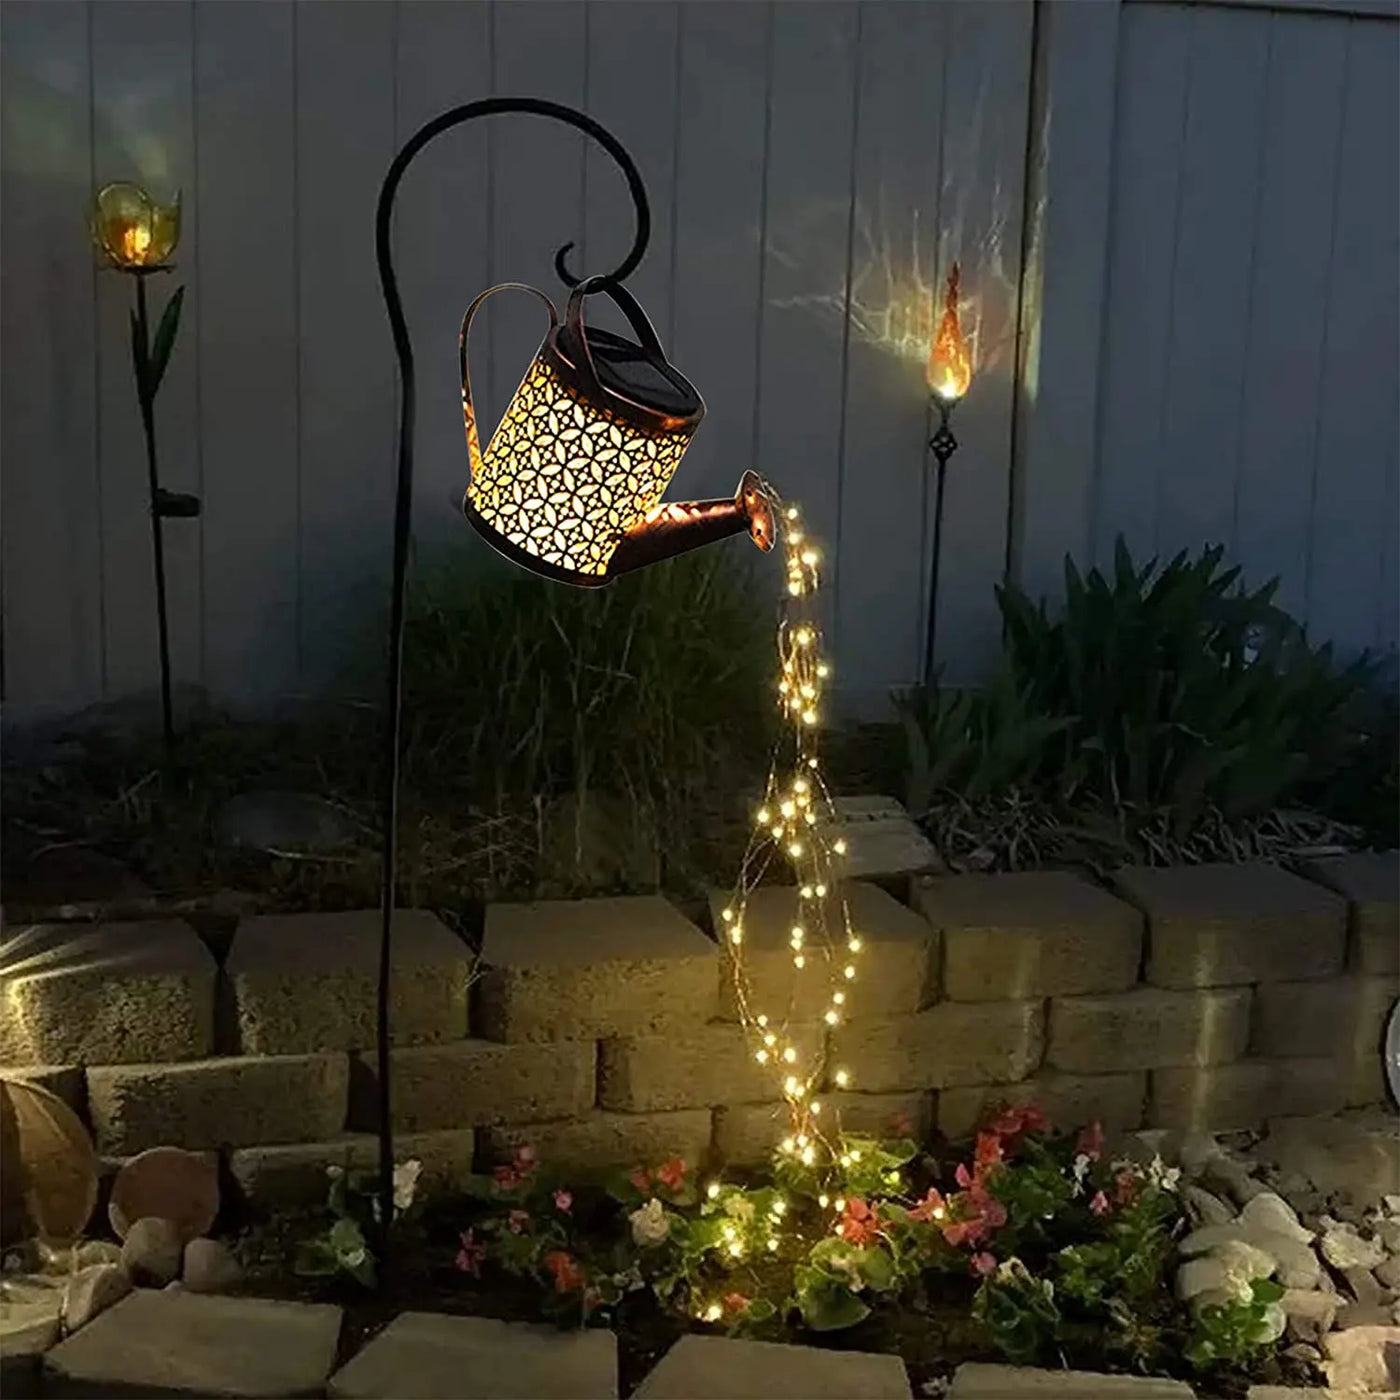 Solar Watering Can Light: Hanging Kettle Lantern, Waterproof Garden Decor Metal Retro Lamp for Outdoor Table, Patio, Lawn